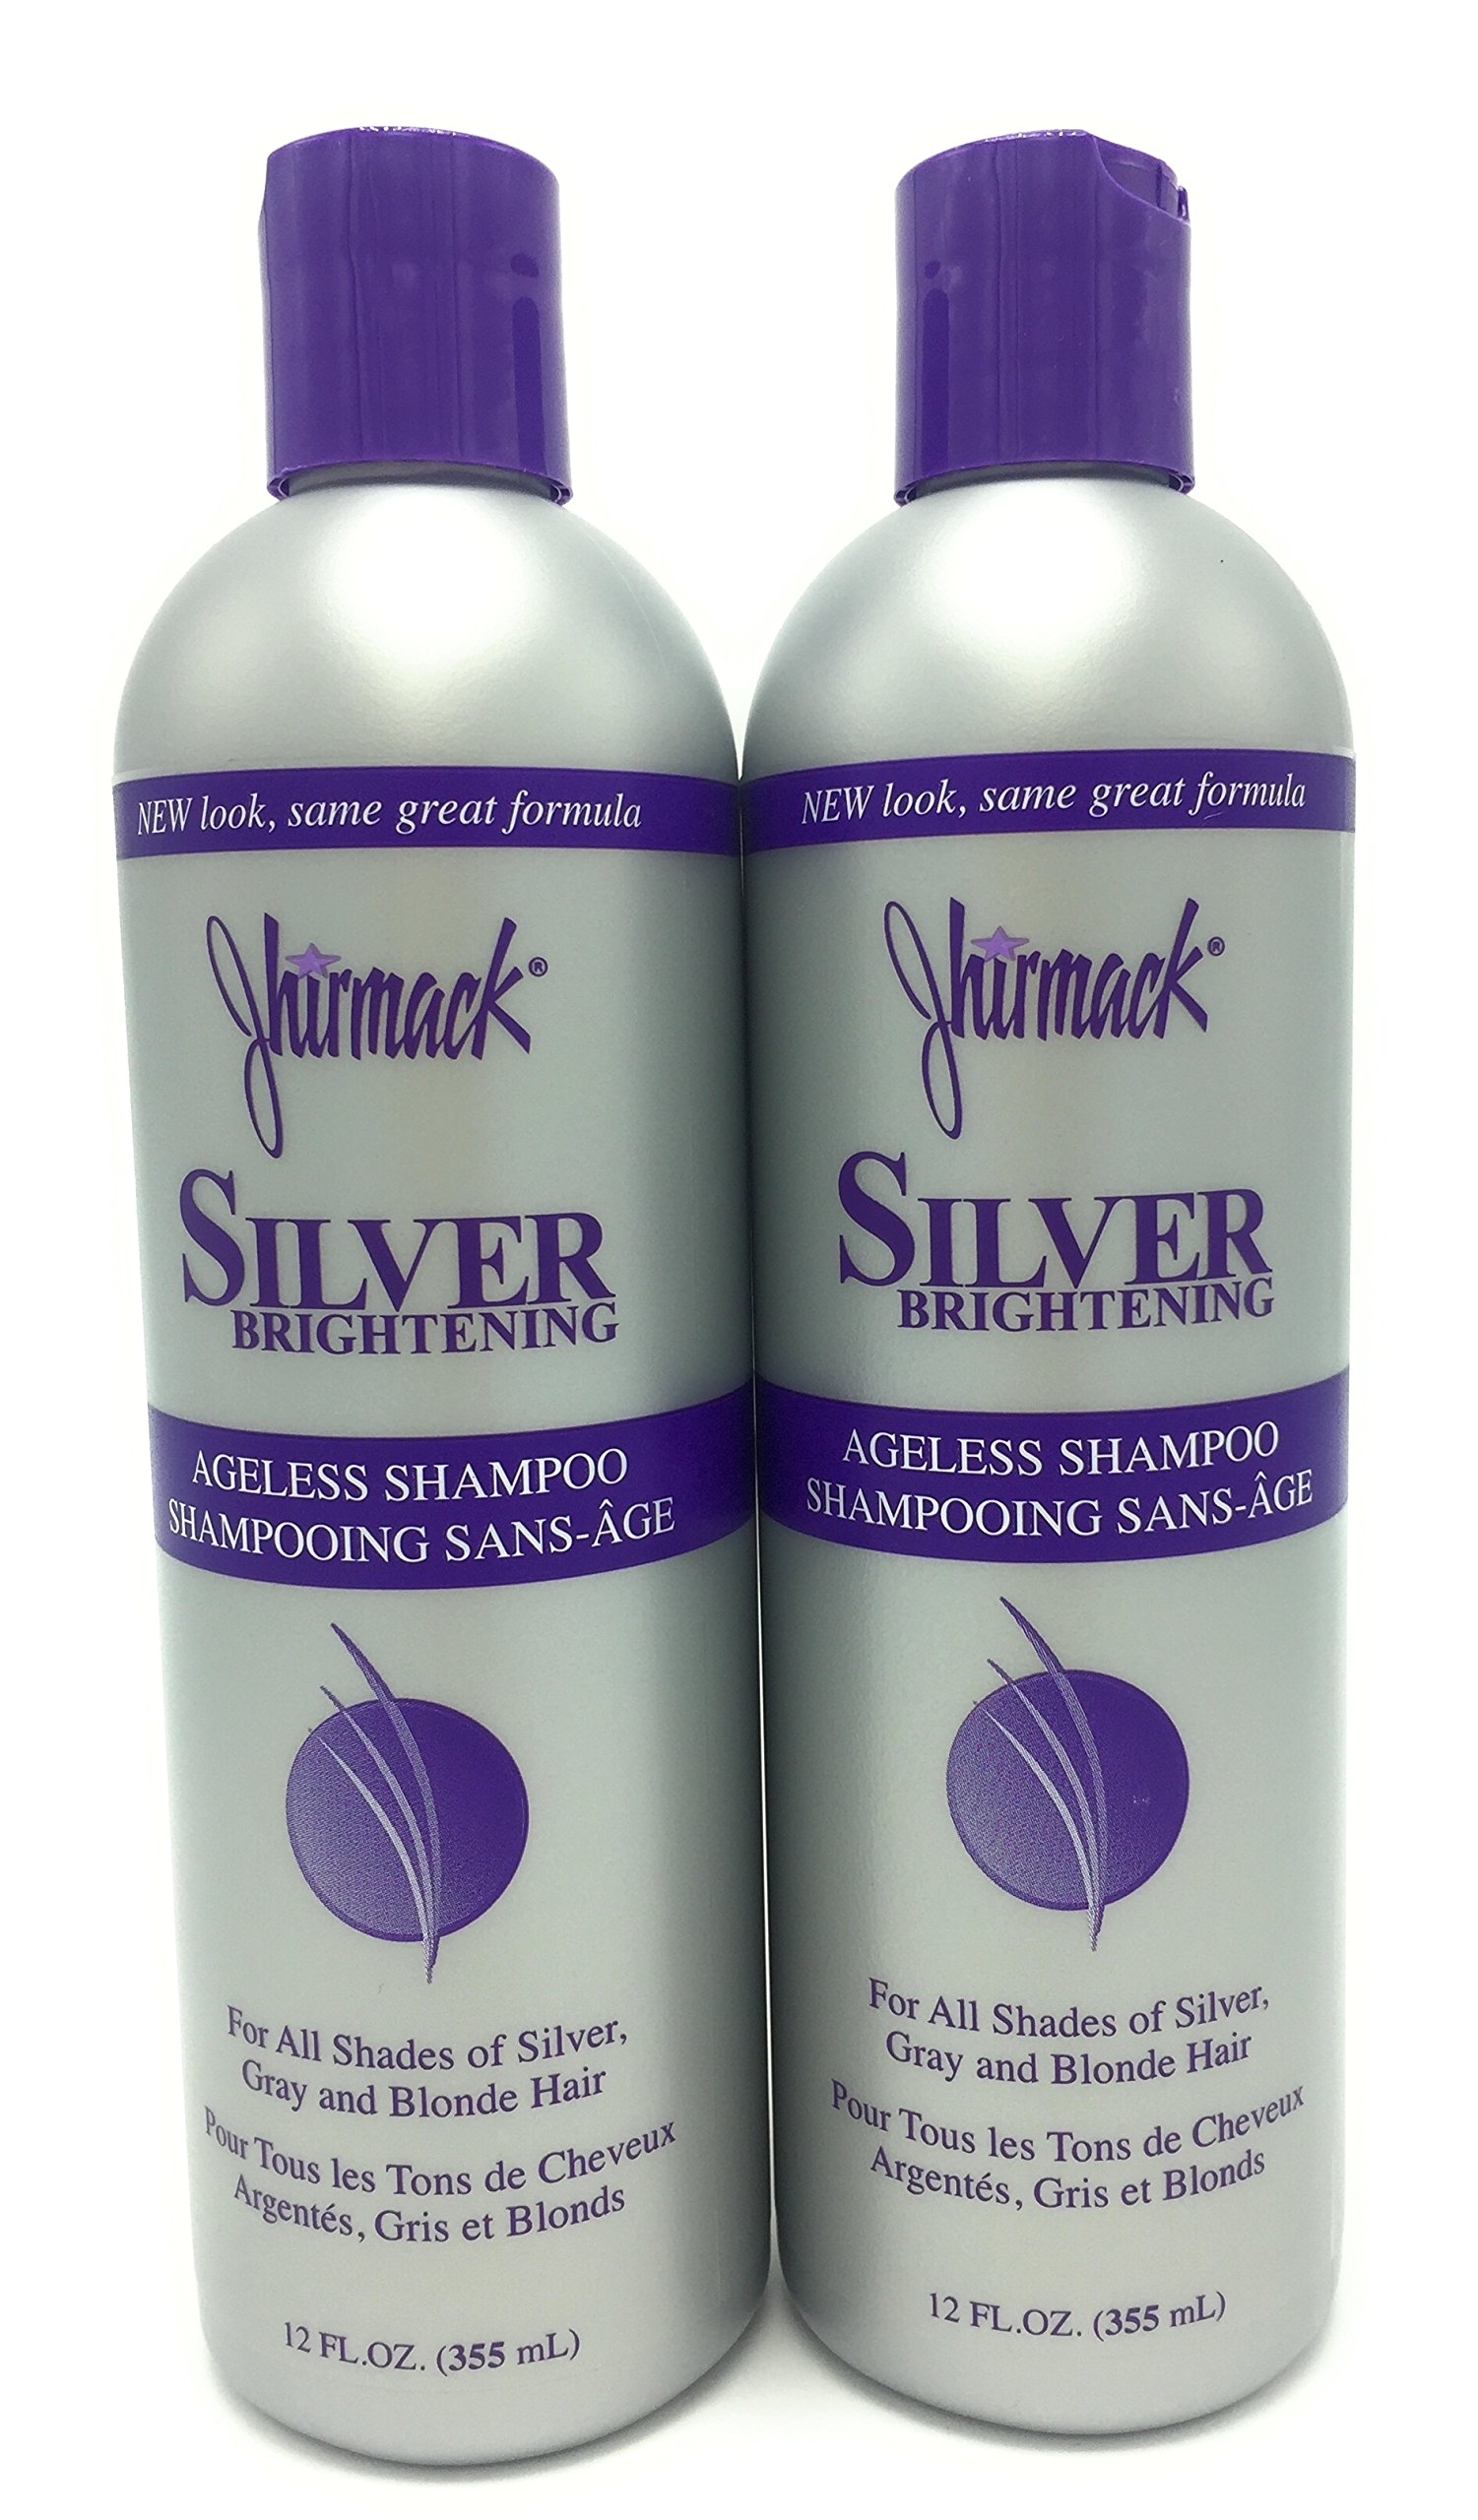 jhirmack silver plus ageless shampoo 12 fl oz pack of 2